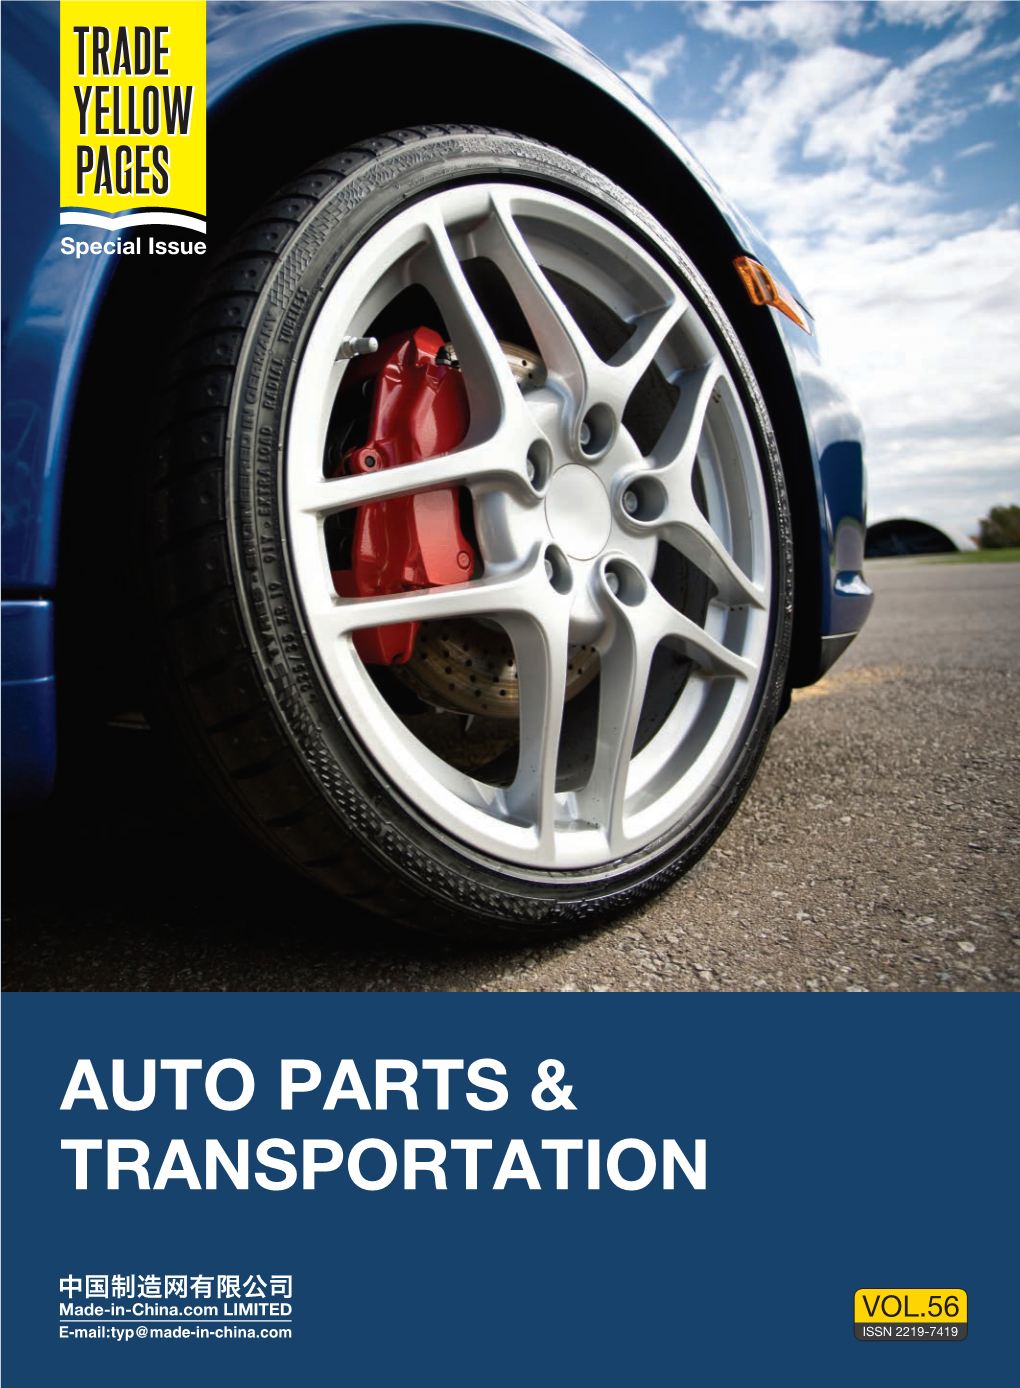 Auto Parts & Transportation